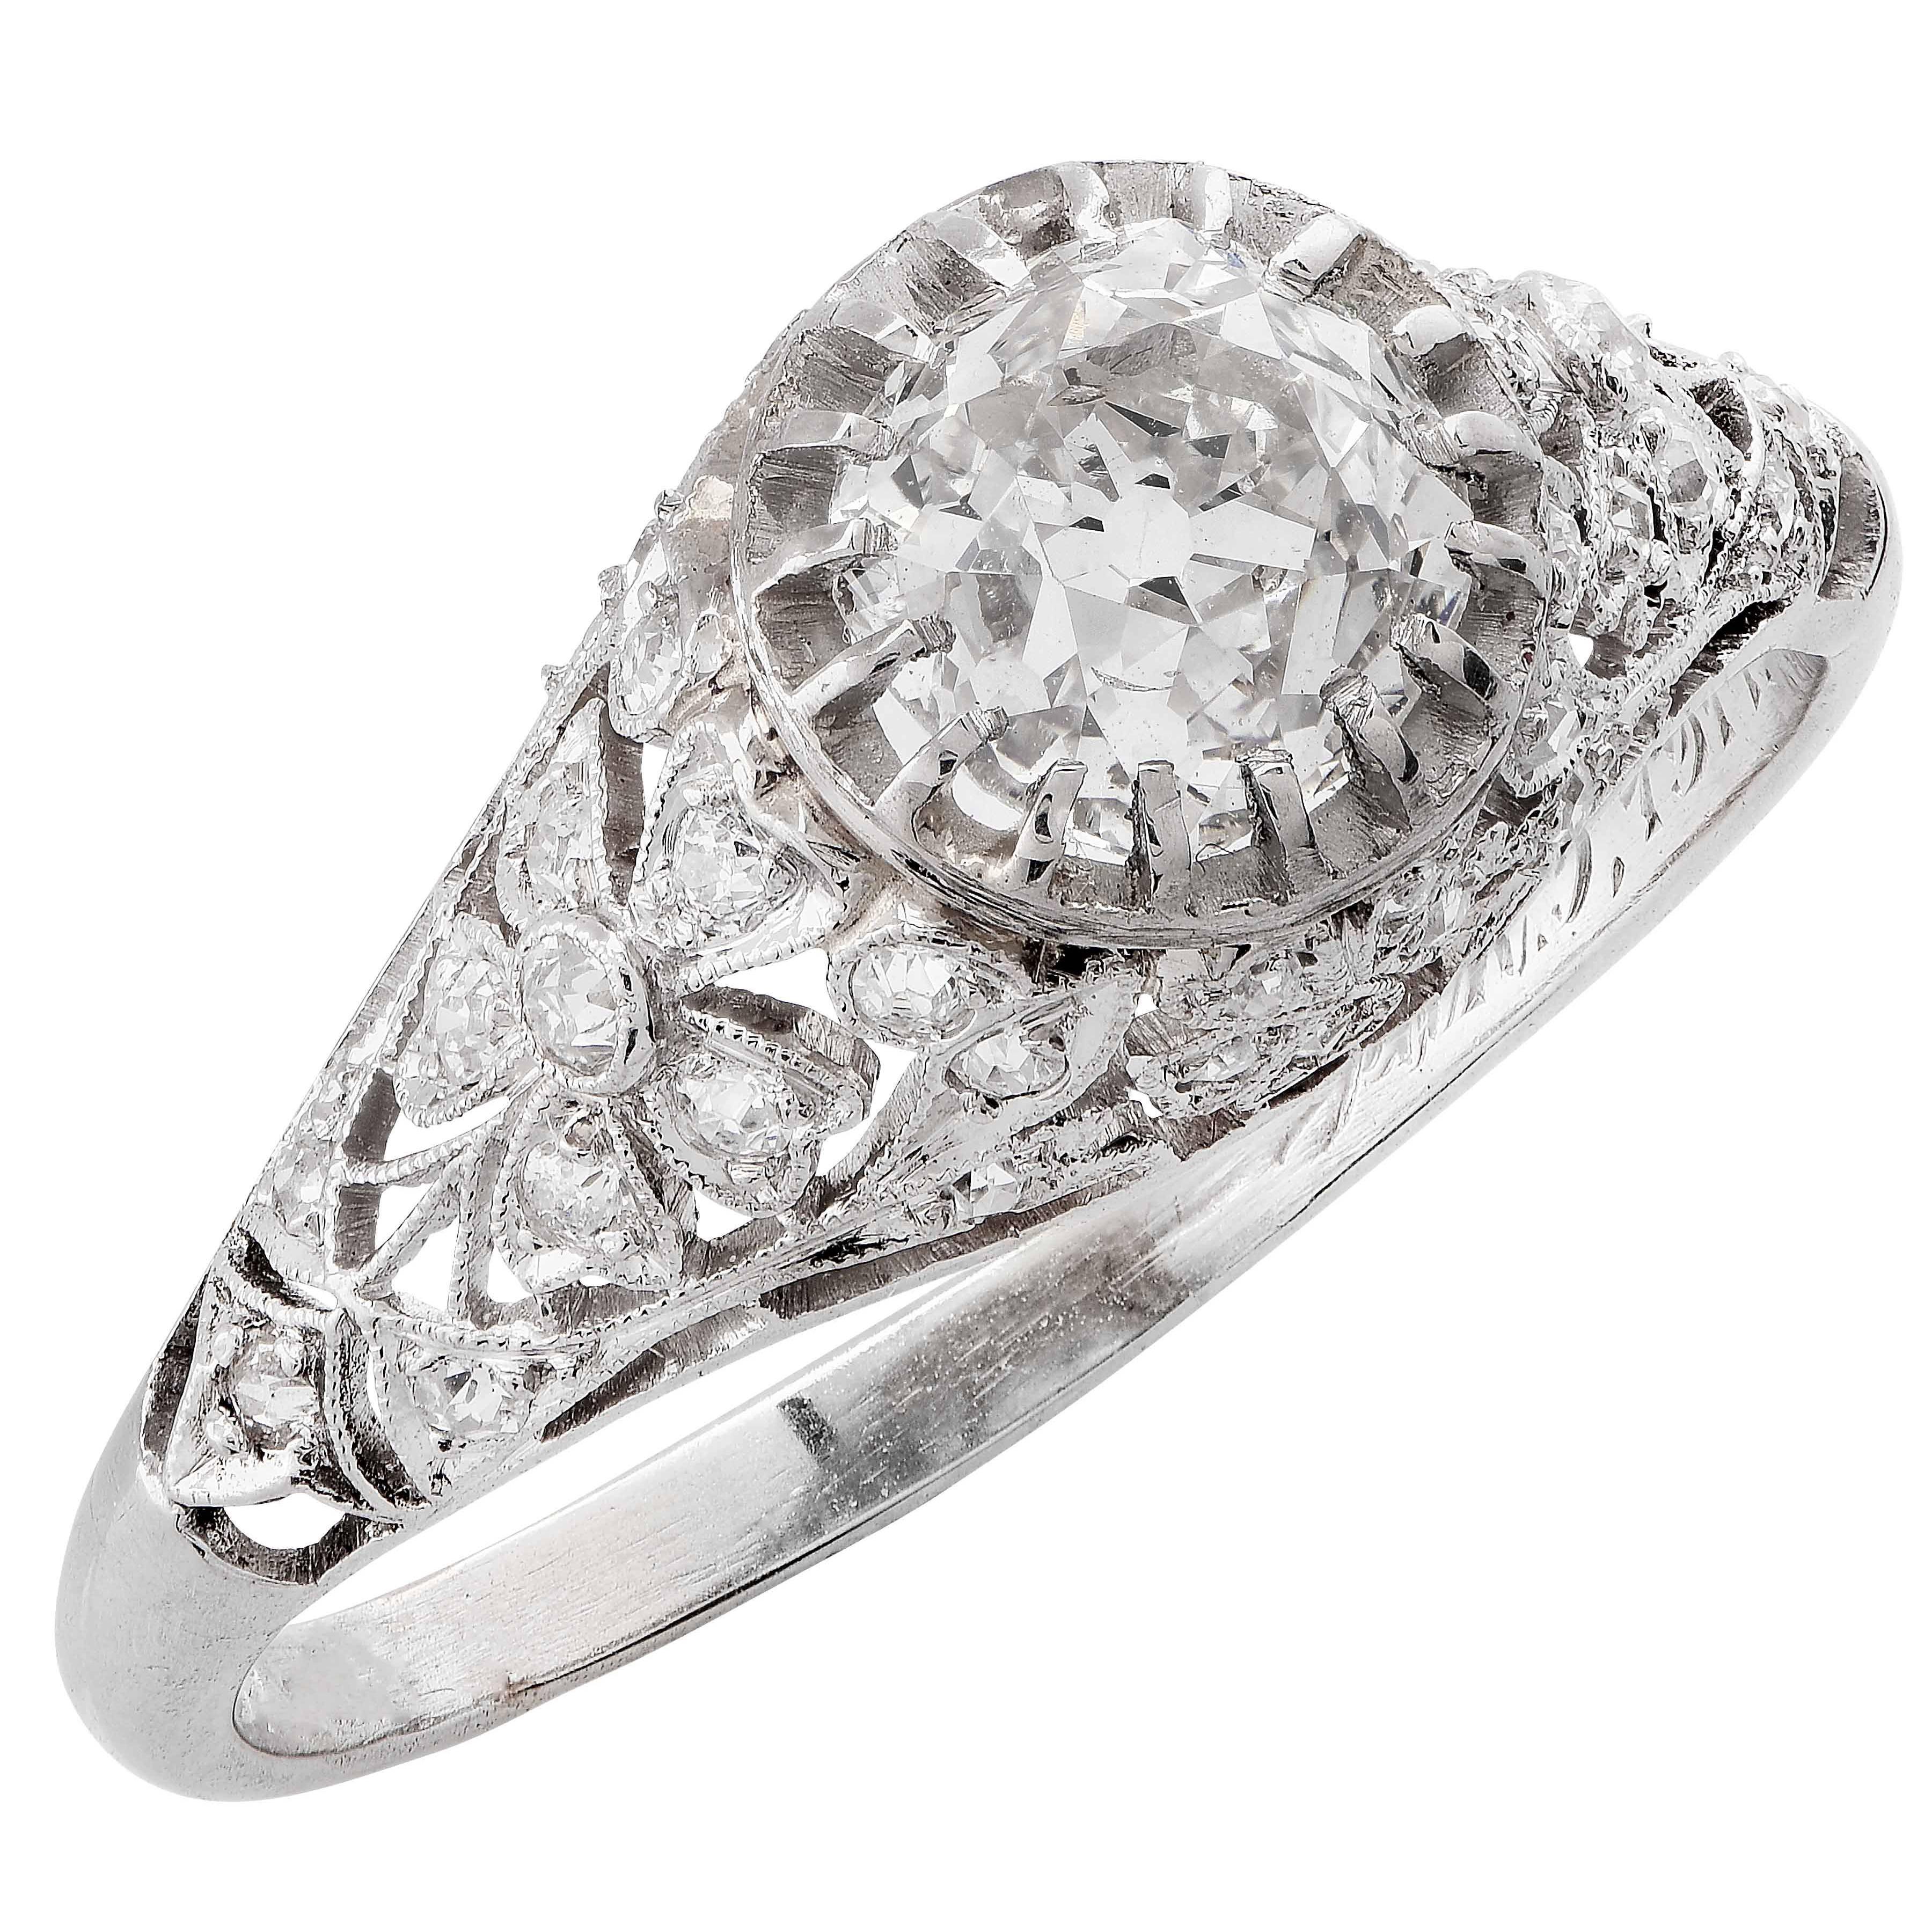 Edwardian 1.31 Carat GIA Certified Mine Cut Diamond Platinum Engagement Ring